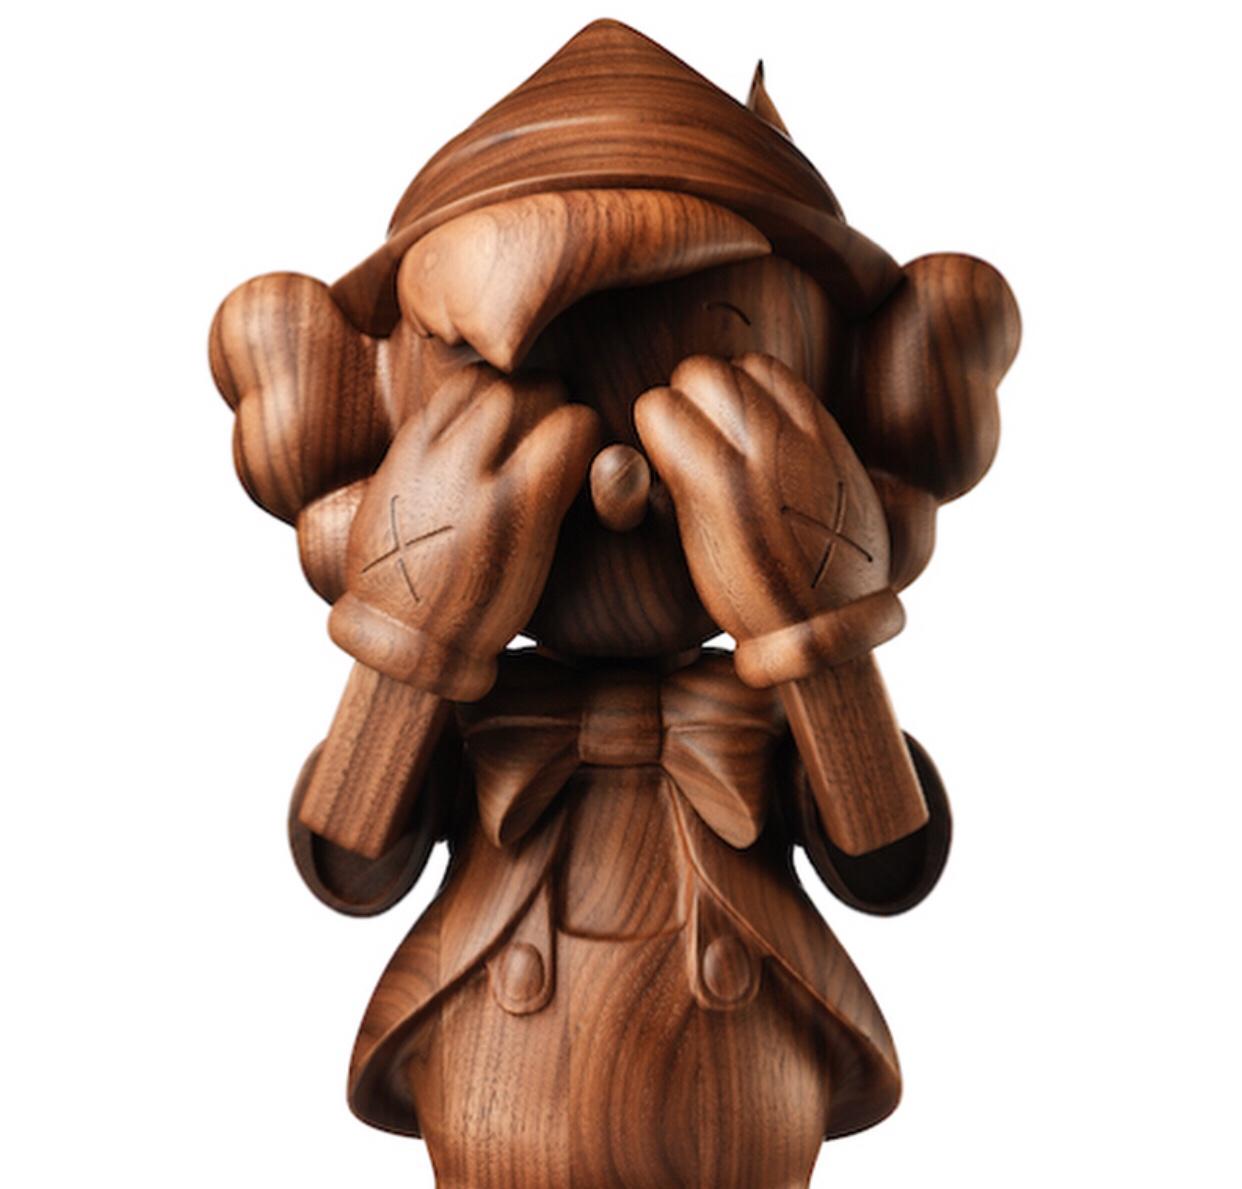 x Disney Wooden Pinocchio - Sculpture by KAWS